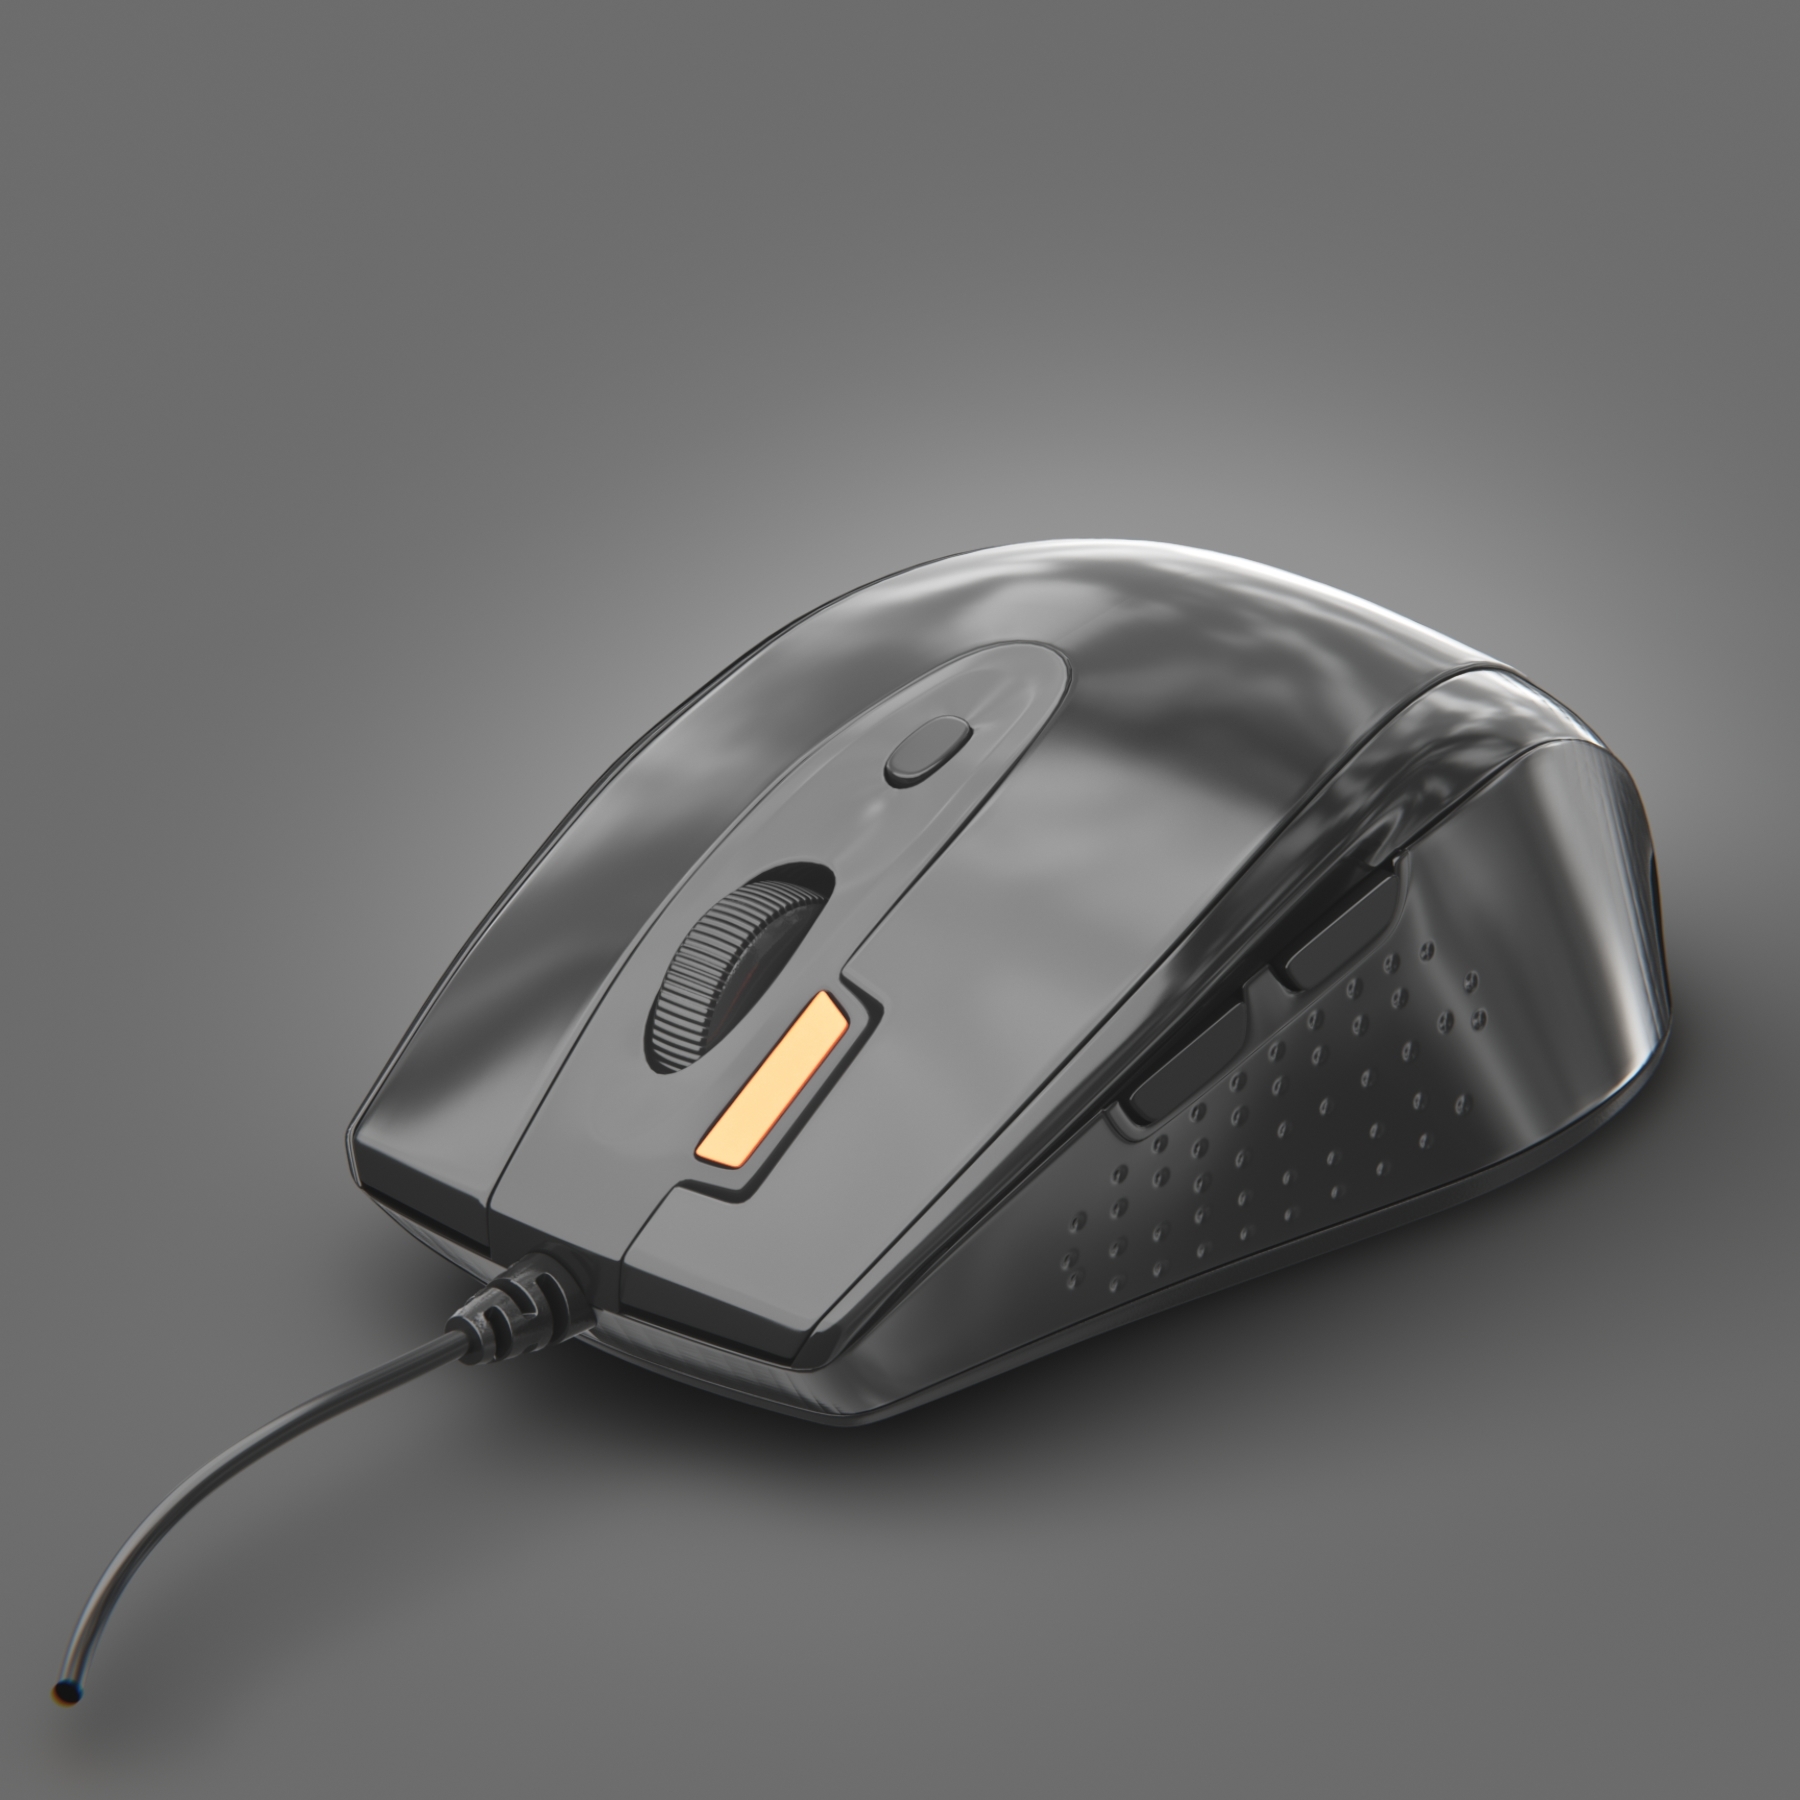 Мыши д. Компьютерная мышь 3ds Max. Мышь компьютерная модель Mice v9. Мышь для 3ds Max. Mouse Computer x6 70d.